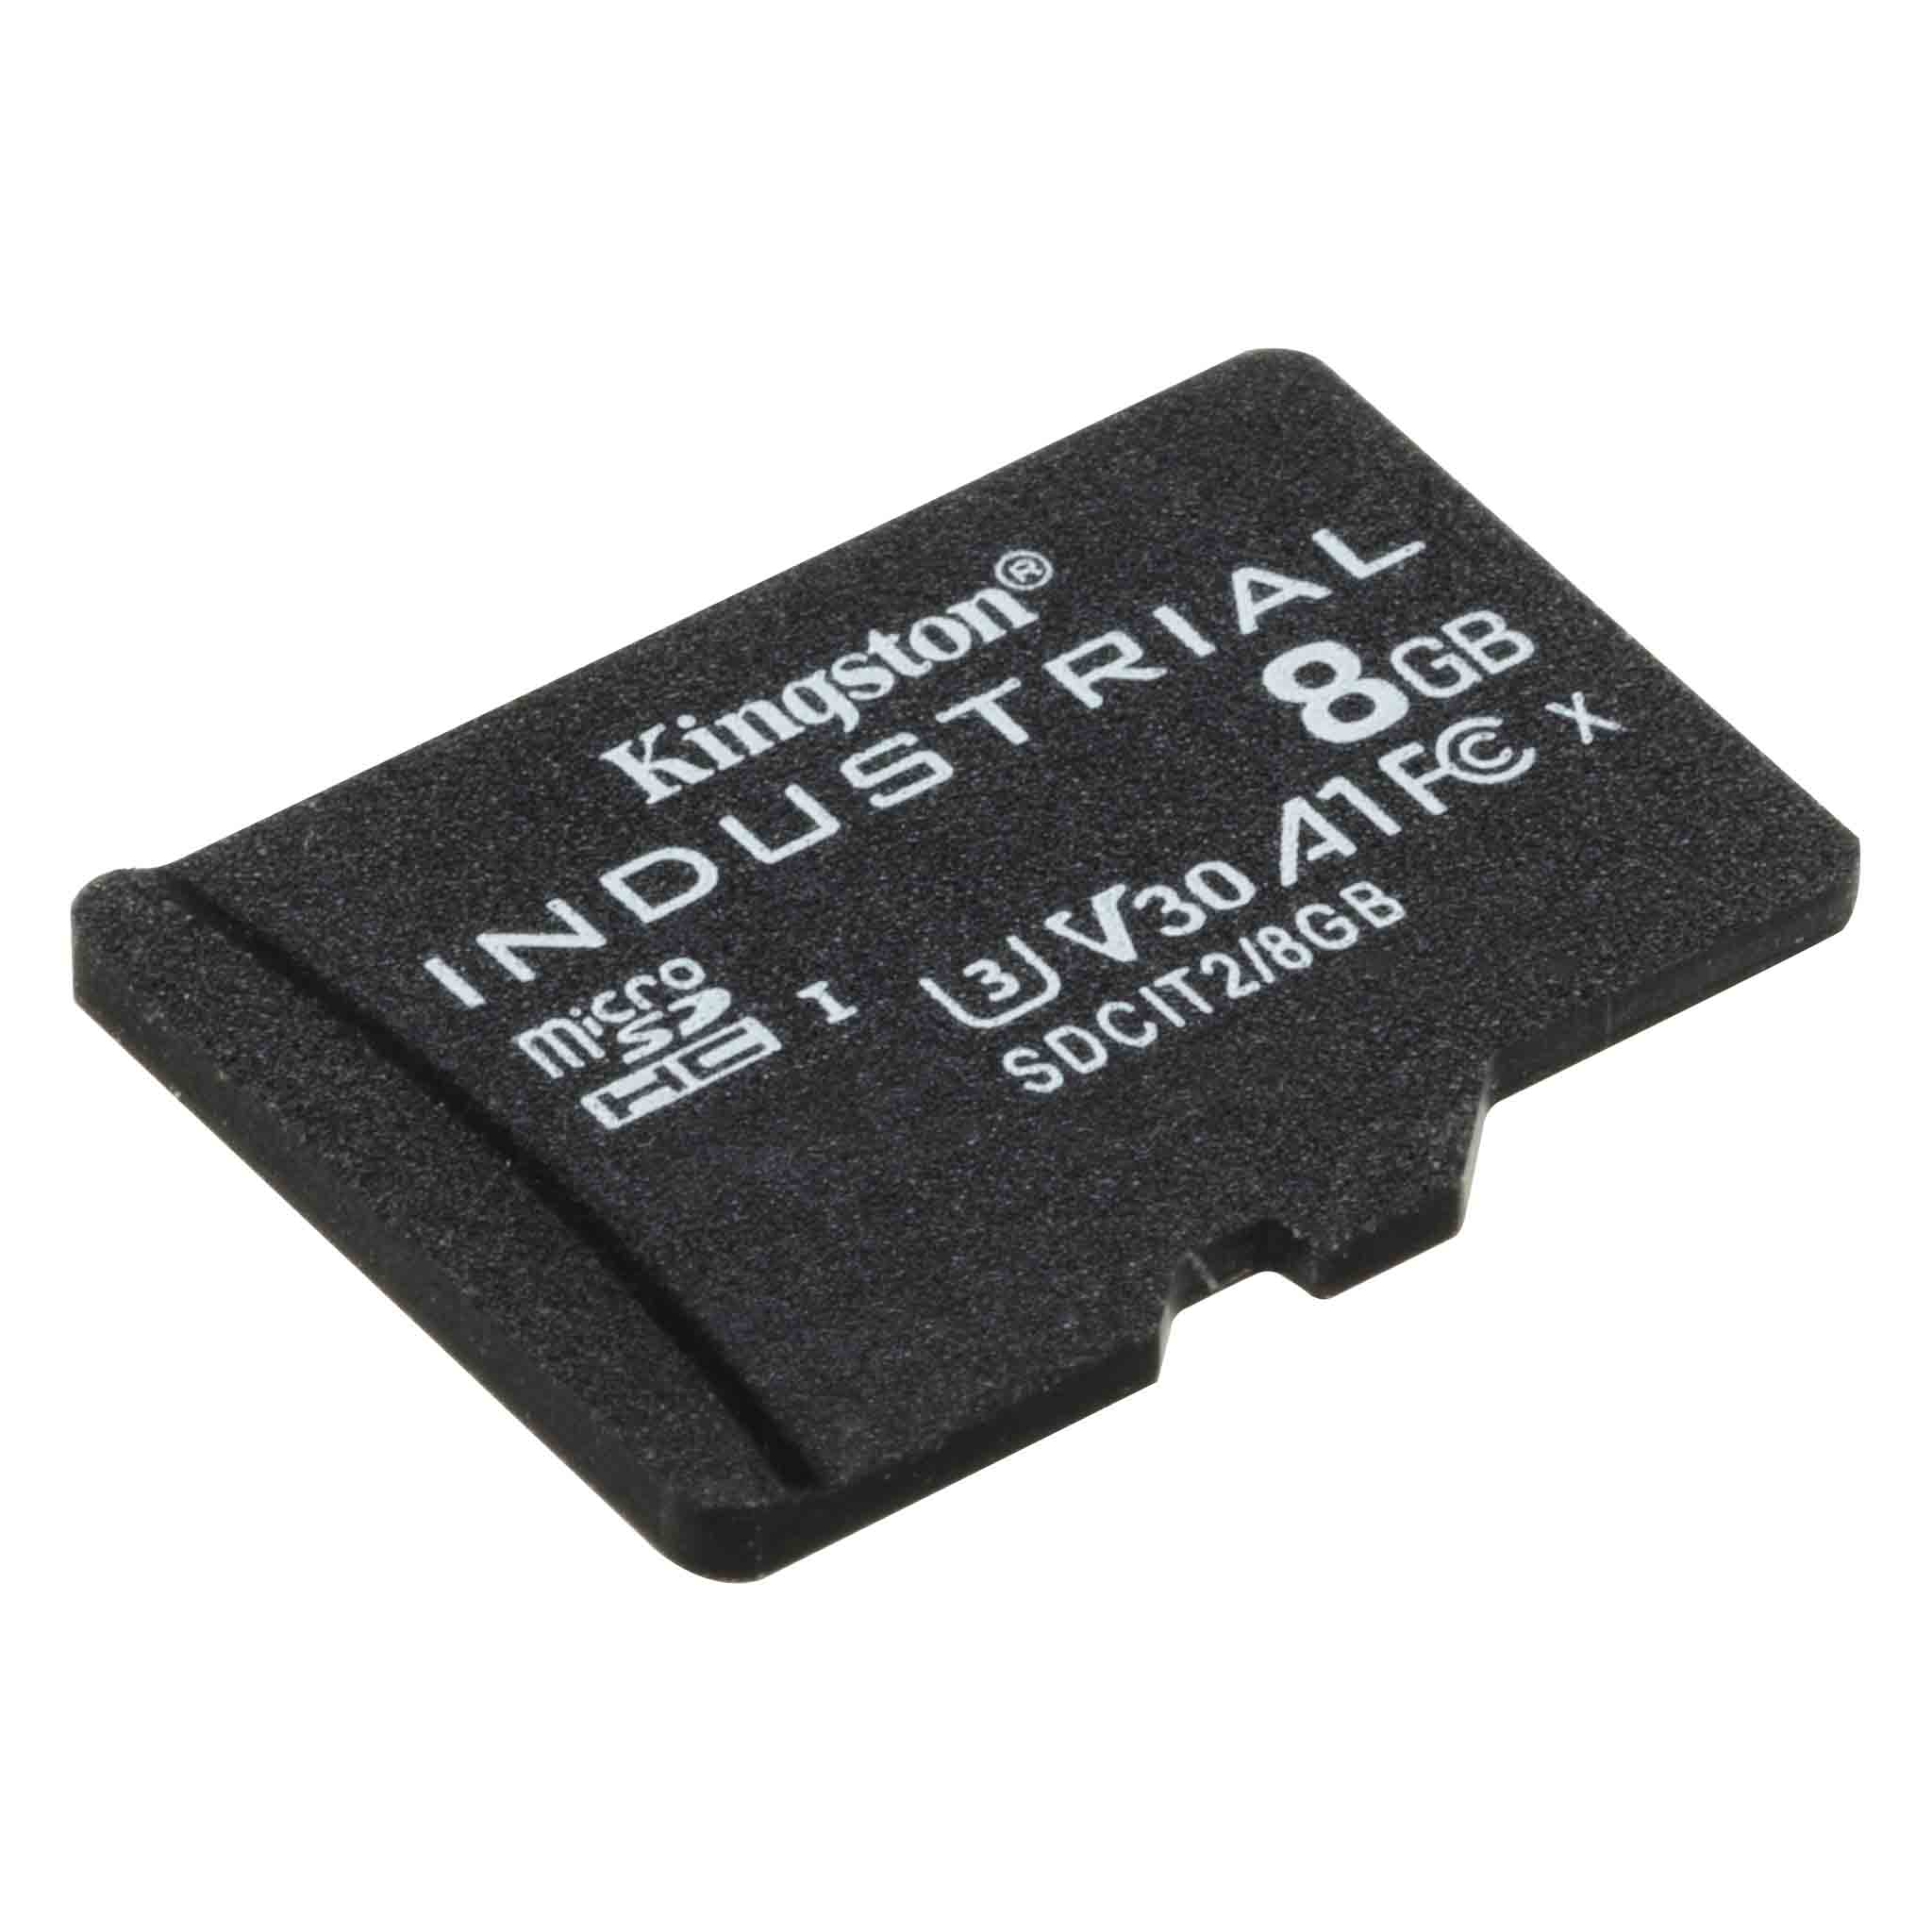 Kingston Industrial Grade 32GB Xiaomi Mi 10 Pro MicroSDHC Card Verified by SanFlash. 90MBs Works for Kingston